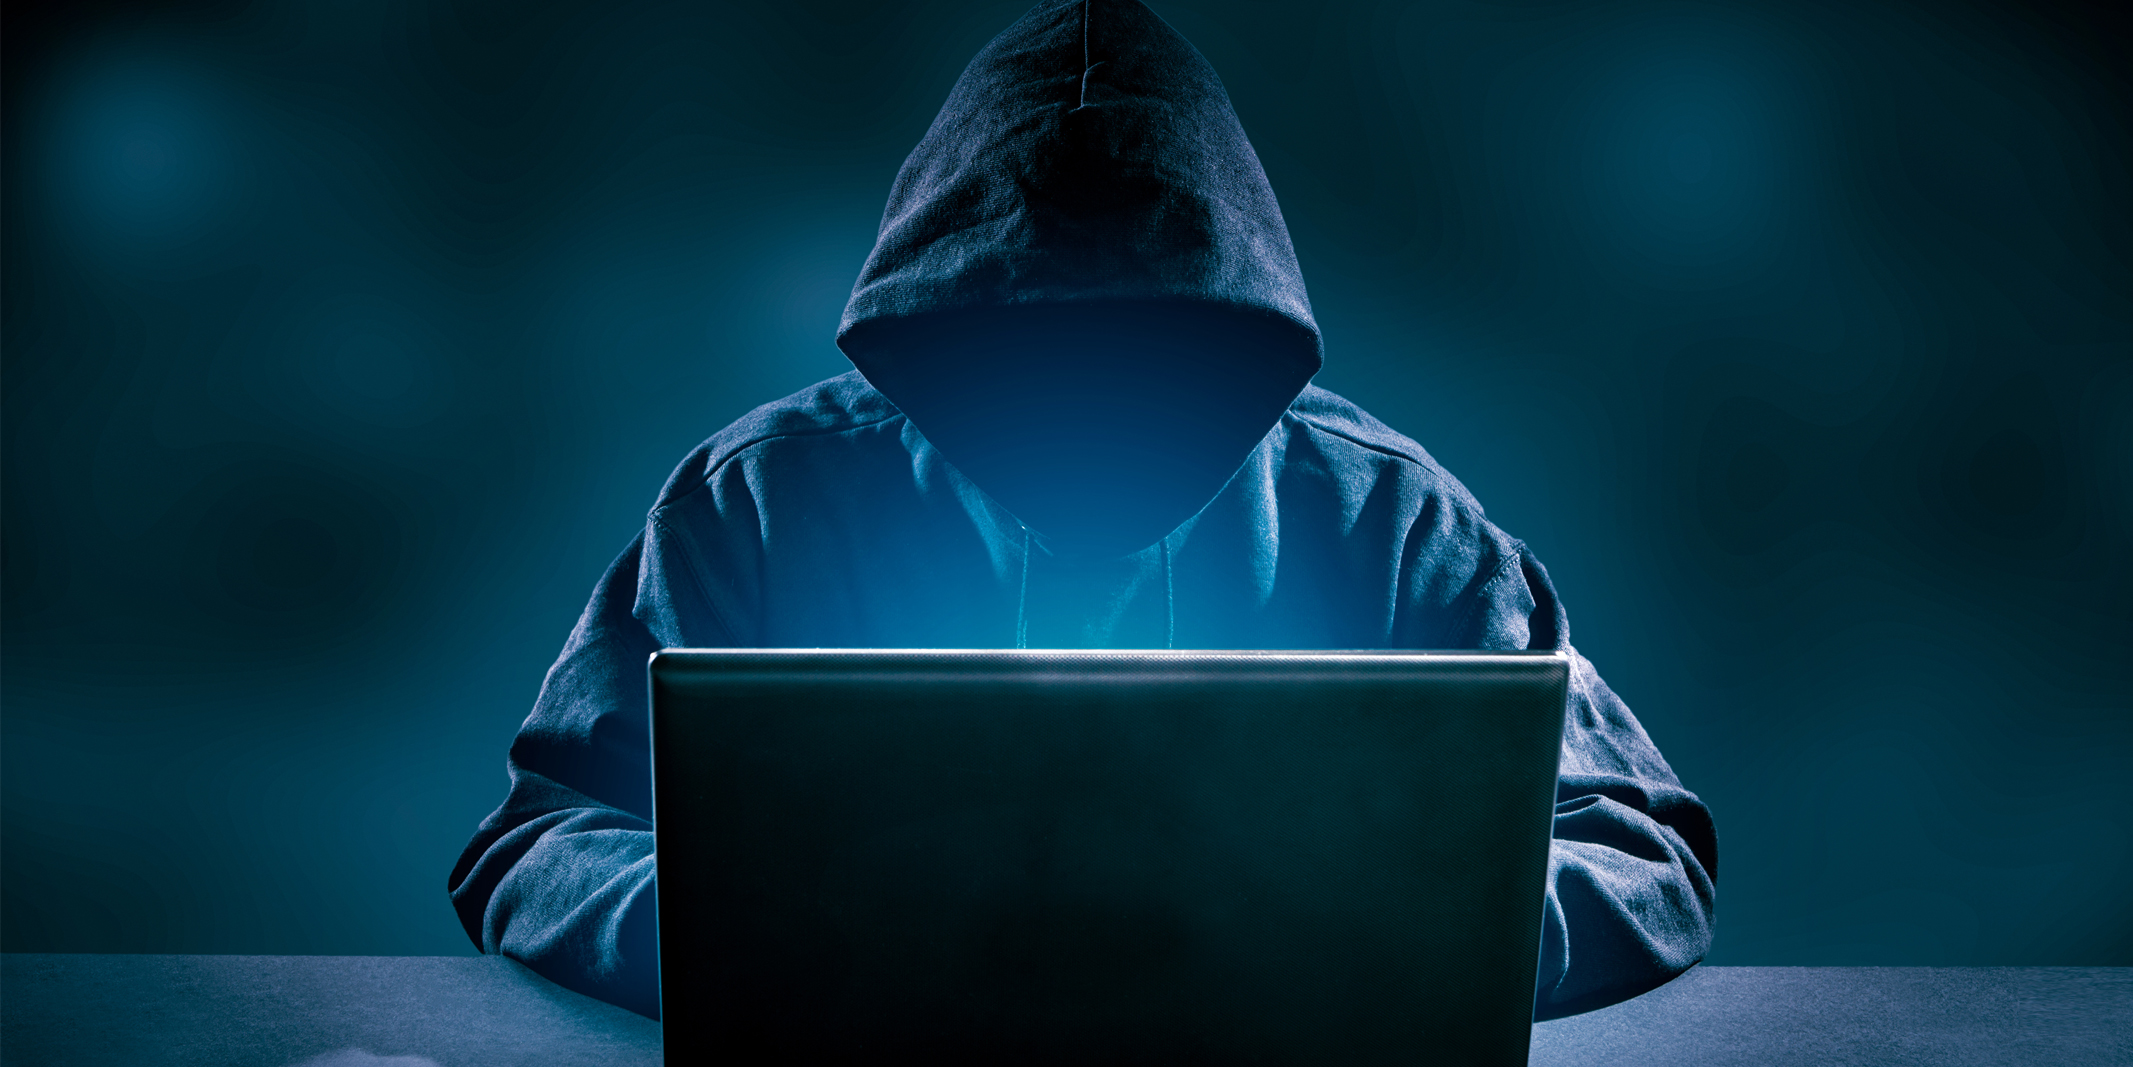 cybercriminal running ransomware attack